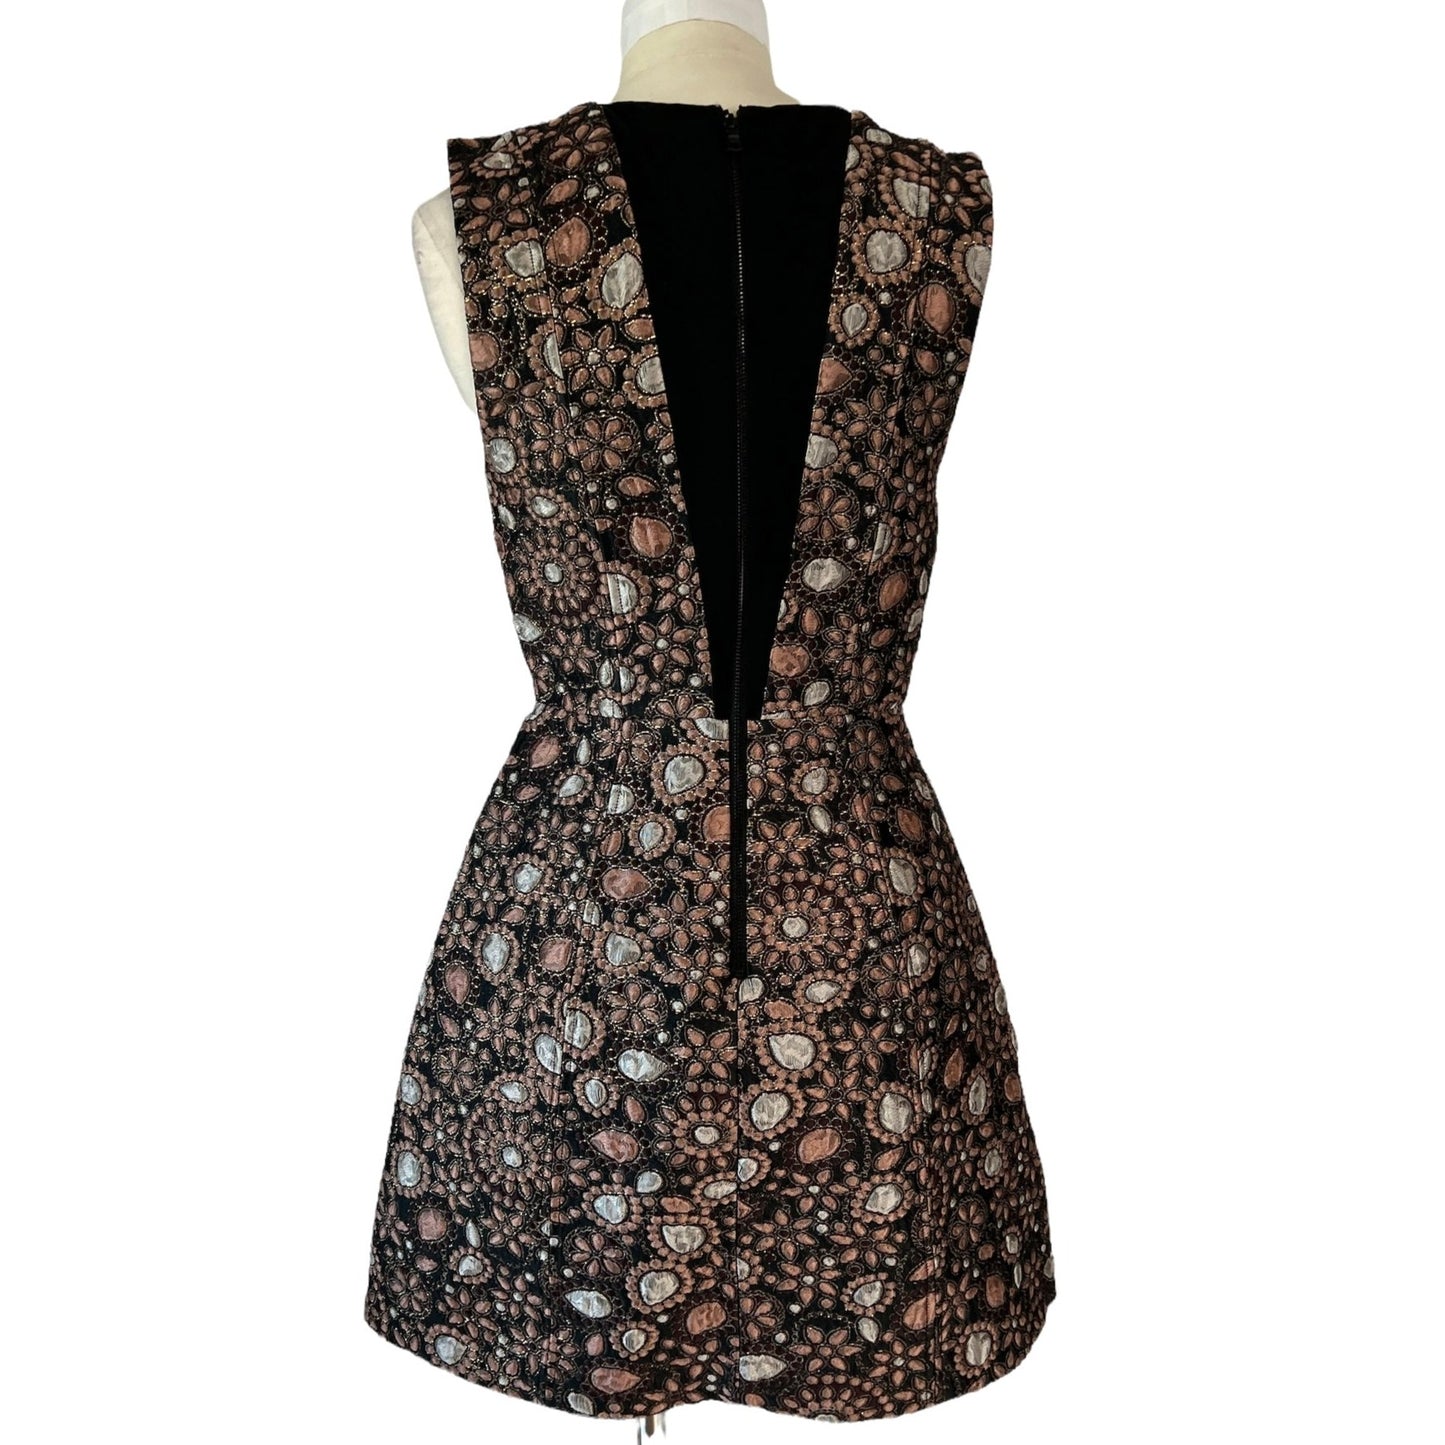 Black & Metallic Fabric Dress - 2